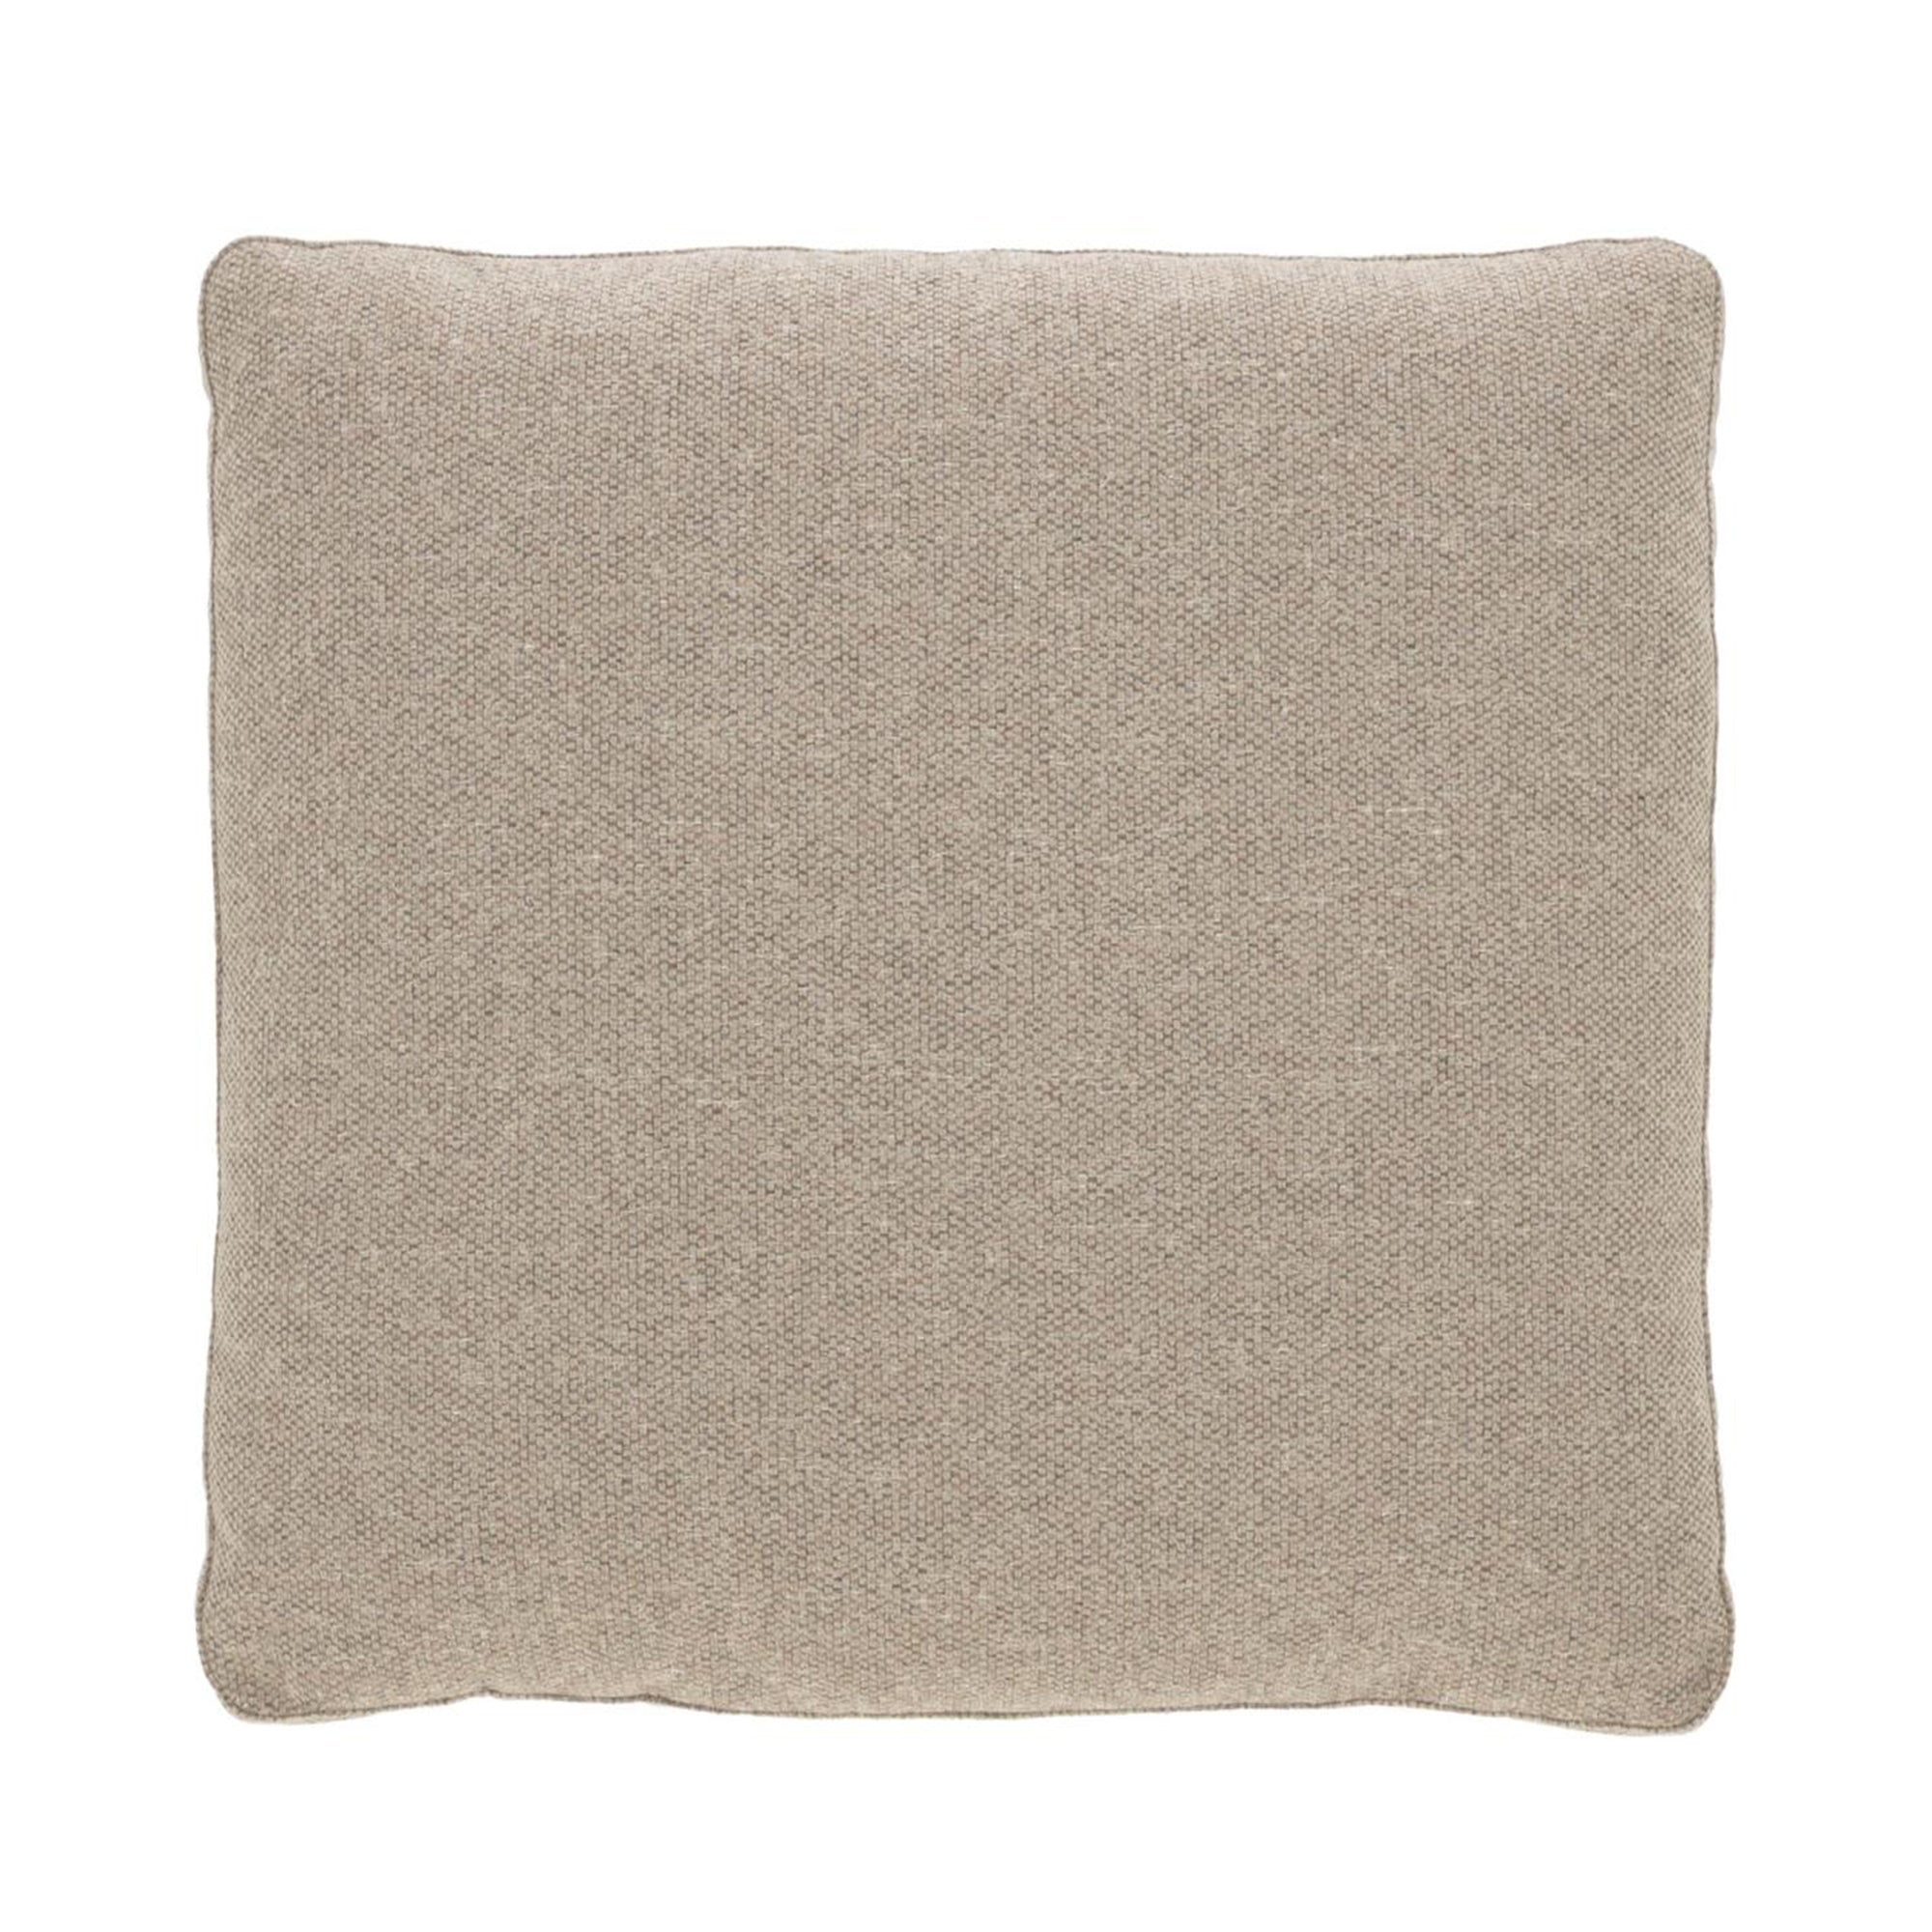 Blok cushion in beige, 60 x 60 cm